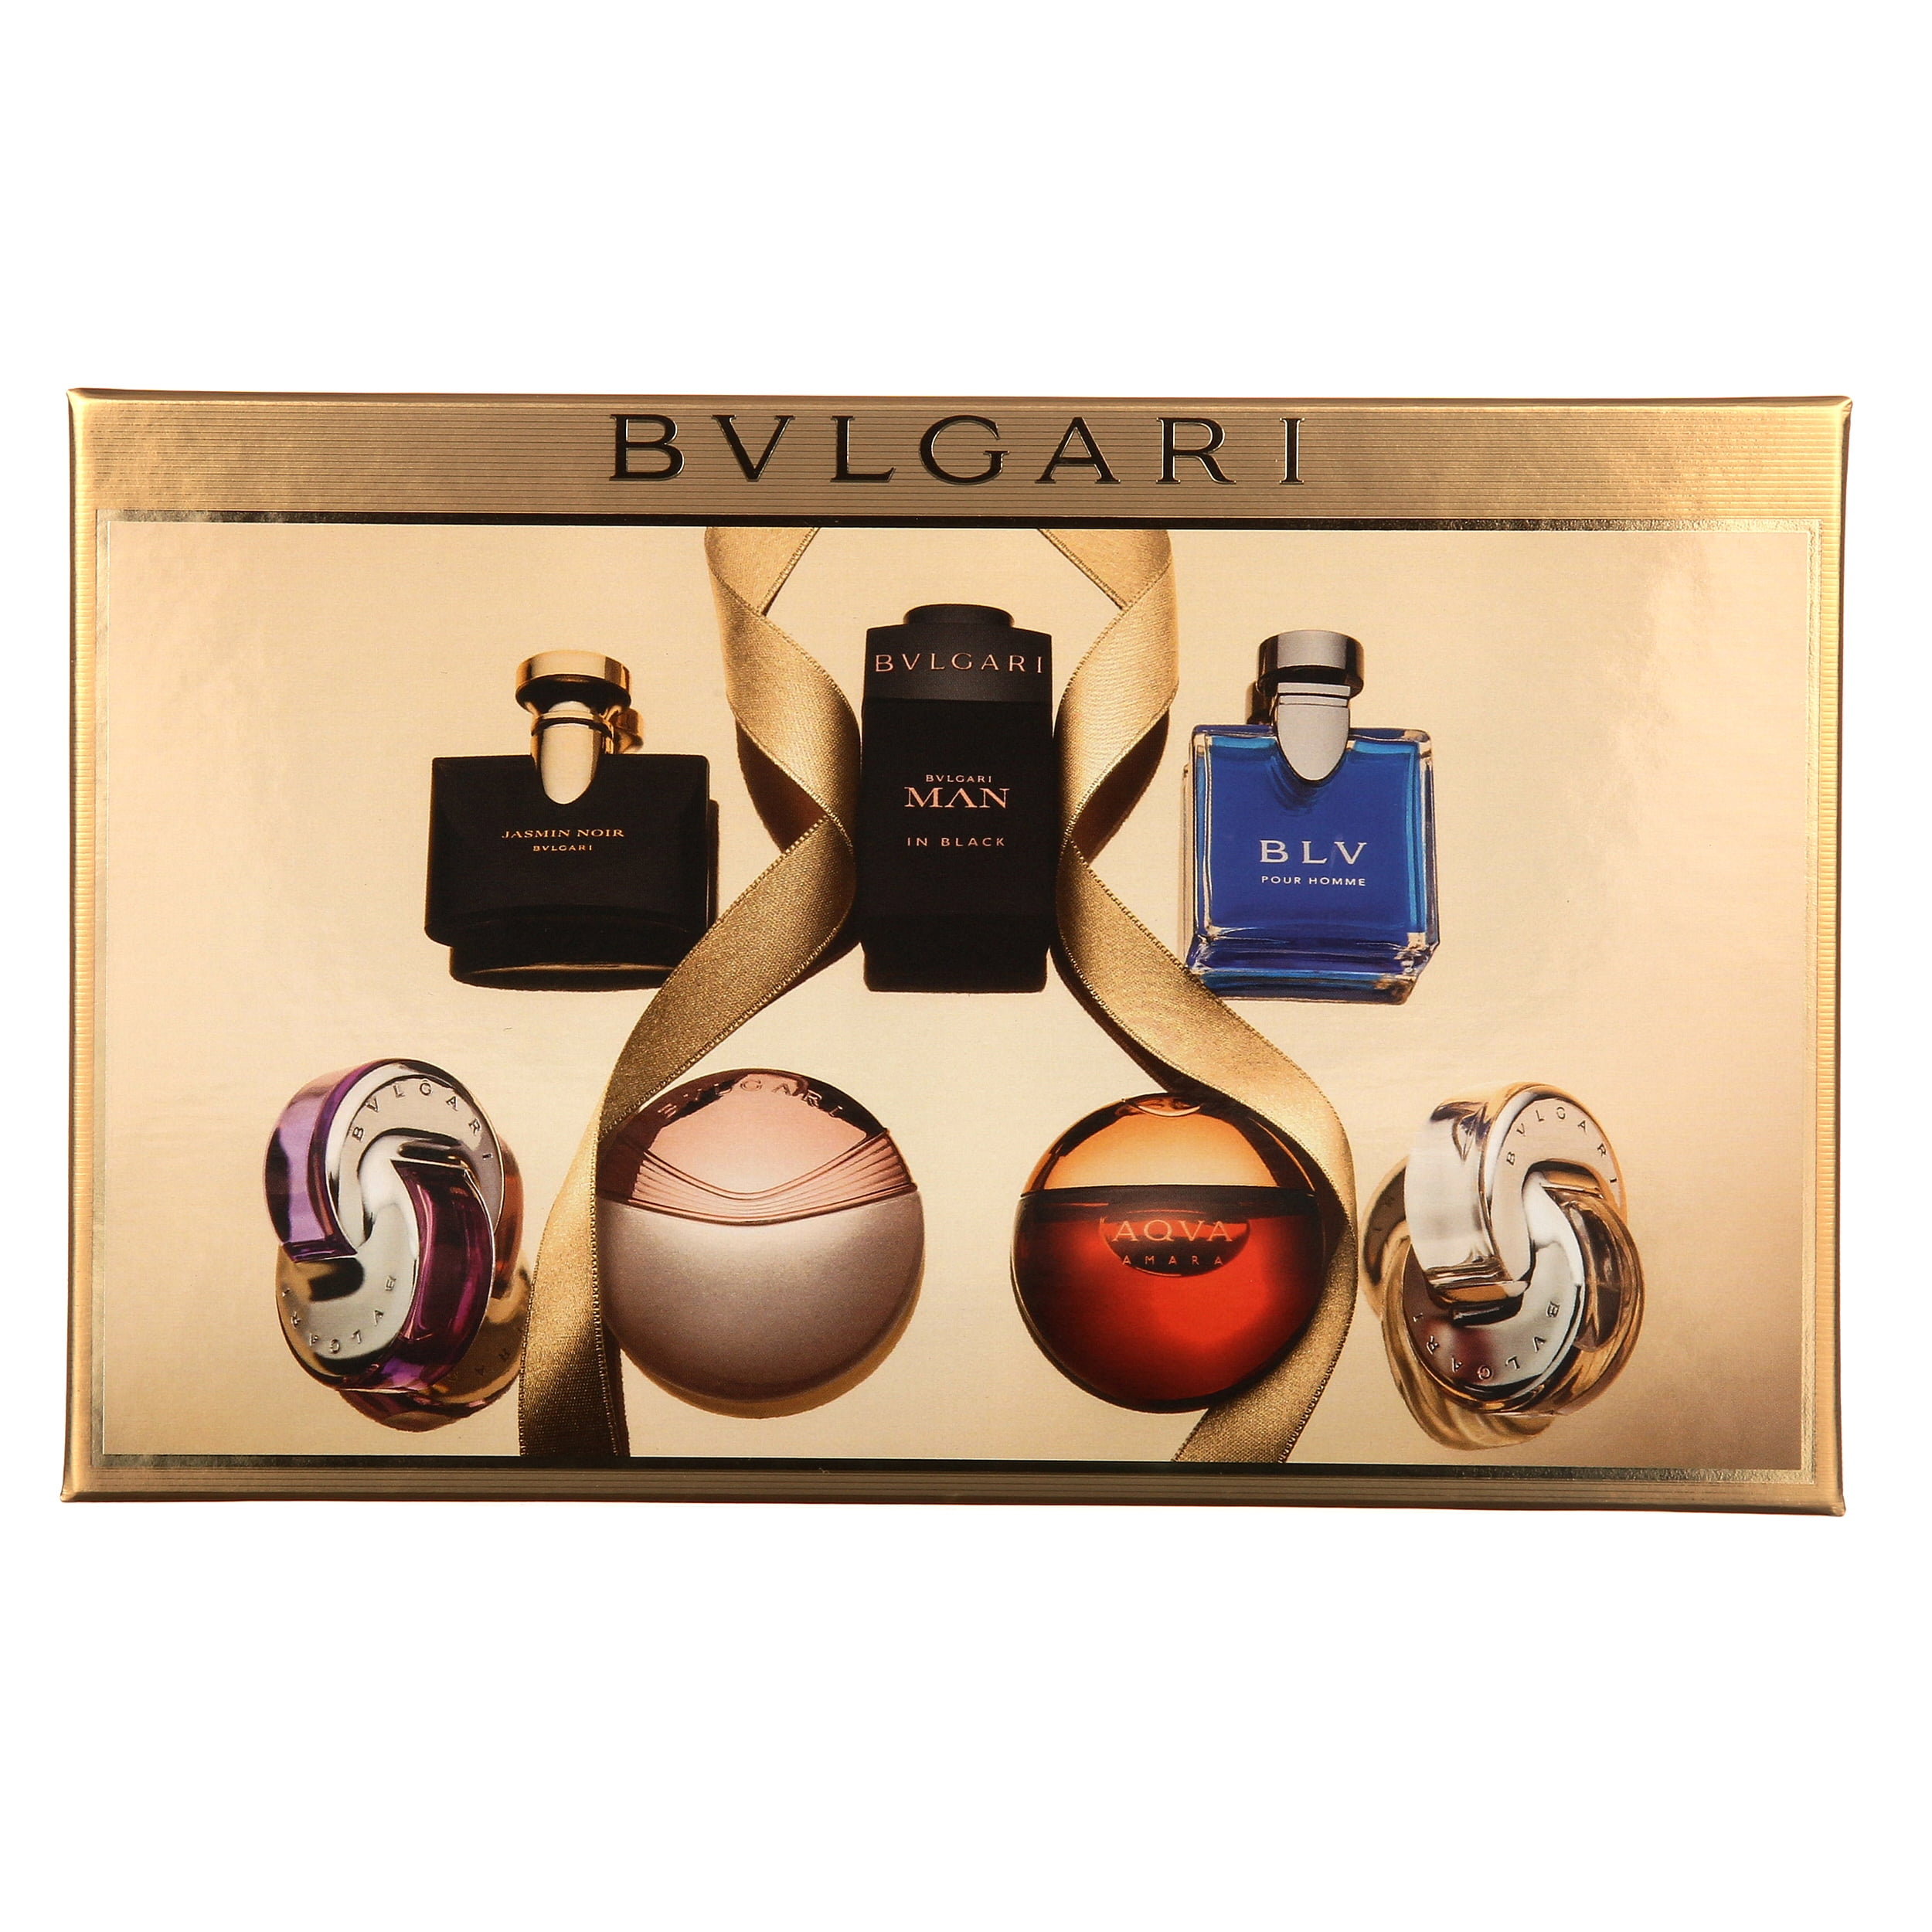 bvlgari iconic miniature collection